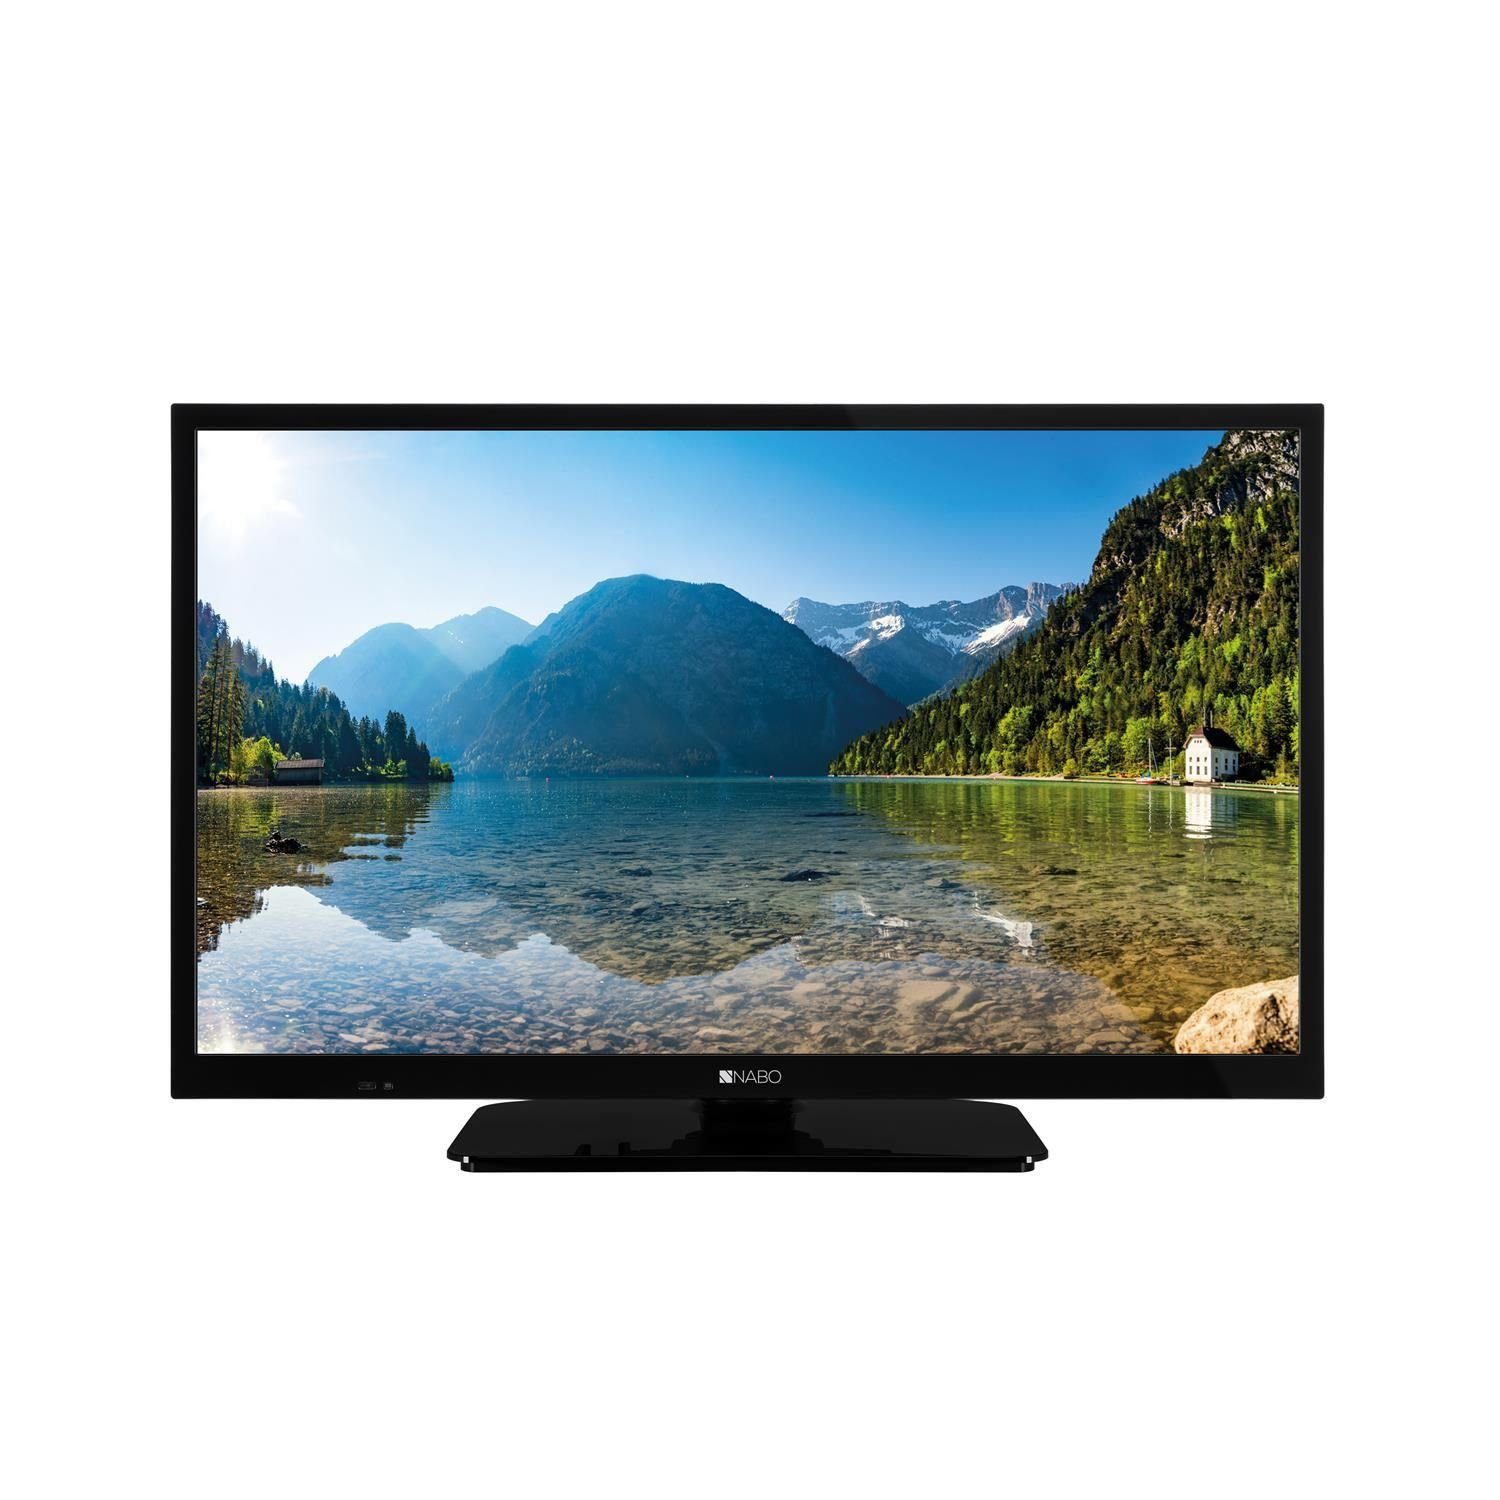 NABO 24 LA4810 LCD-LED Aufnahme, Pay-TV, ready, Smart Fernseher Google optional Assistant Alexa TV, (60 Zoll, Amazon cm/24 HD & kompatibel)